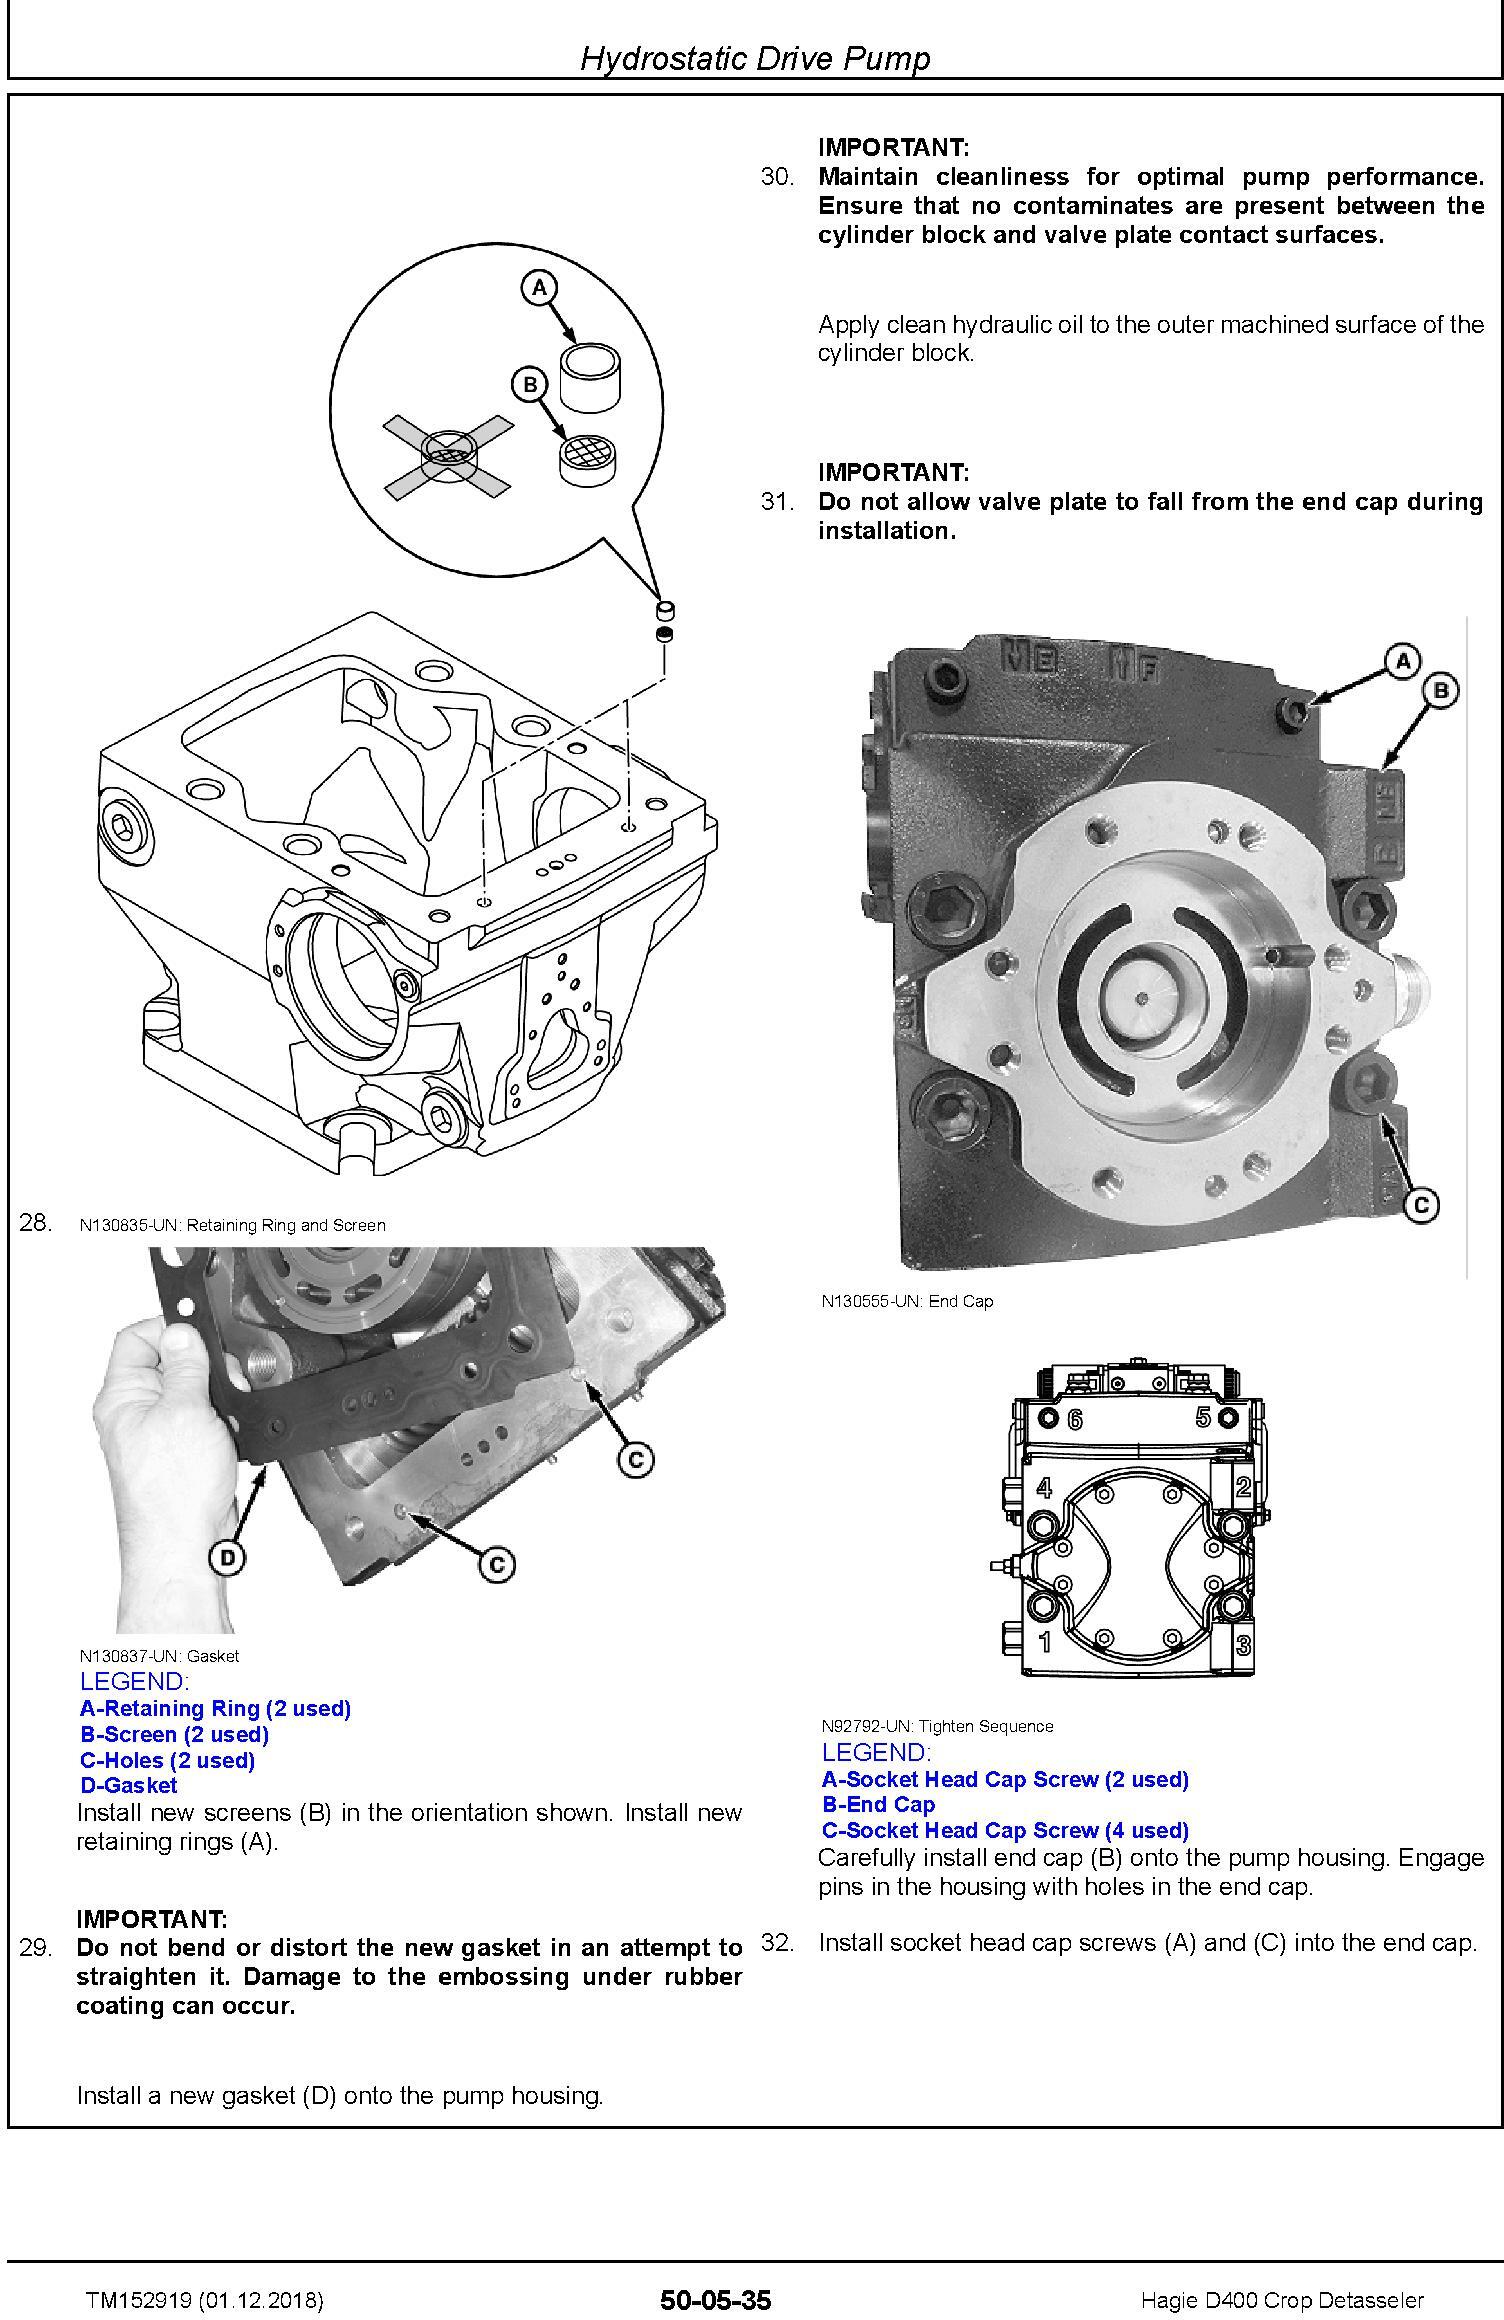 Hagie D400 Crop Detasseler Repair Technical Manual (TM152919) - 2